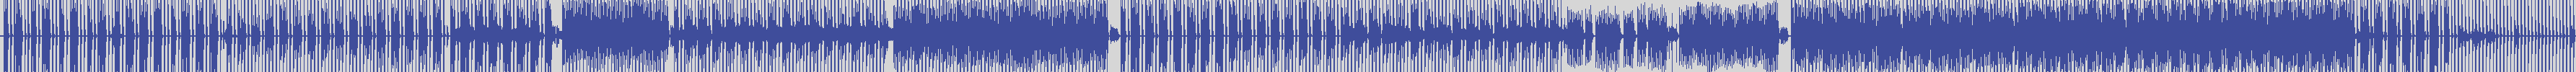 atomic_recordings [AR006] Fedakki - Happy [Fedo Vs Alle Vakki Mix] audio wave form